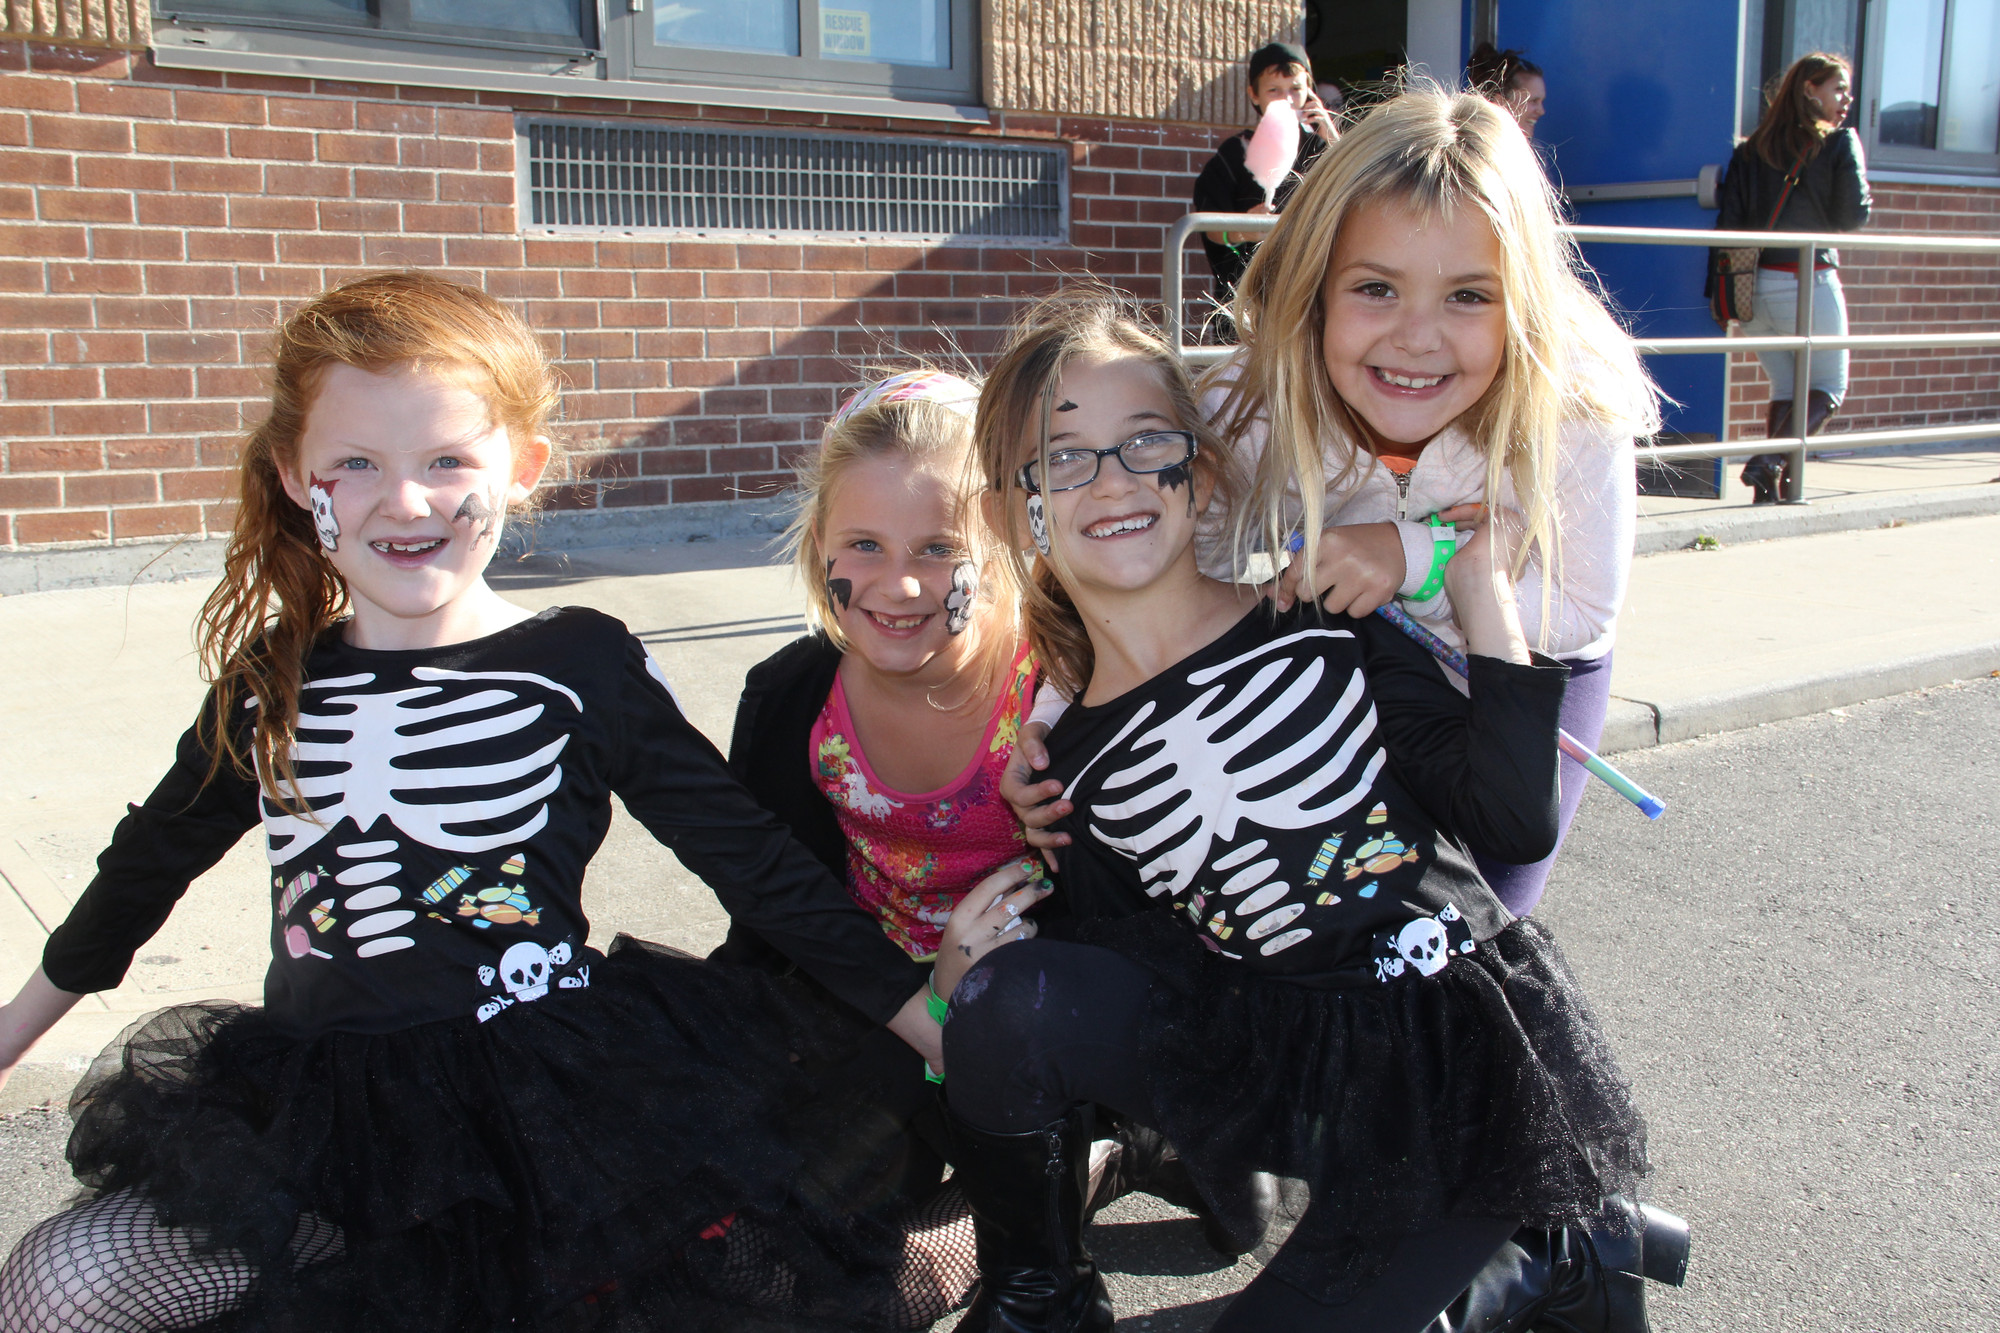 Paige Perrone, Erin Khankan, Emmalee Egan and Elizabeth Khankan took a break from their Halloween fun to pose for a photo.